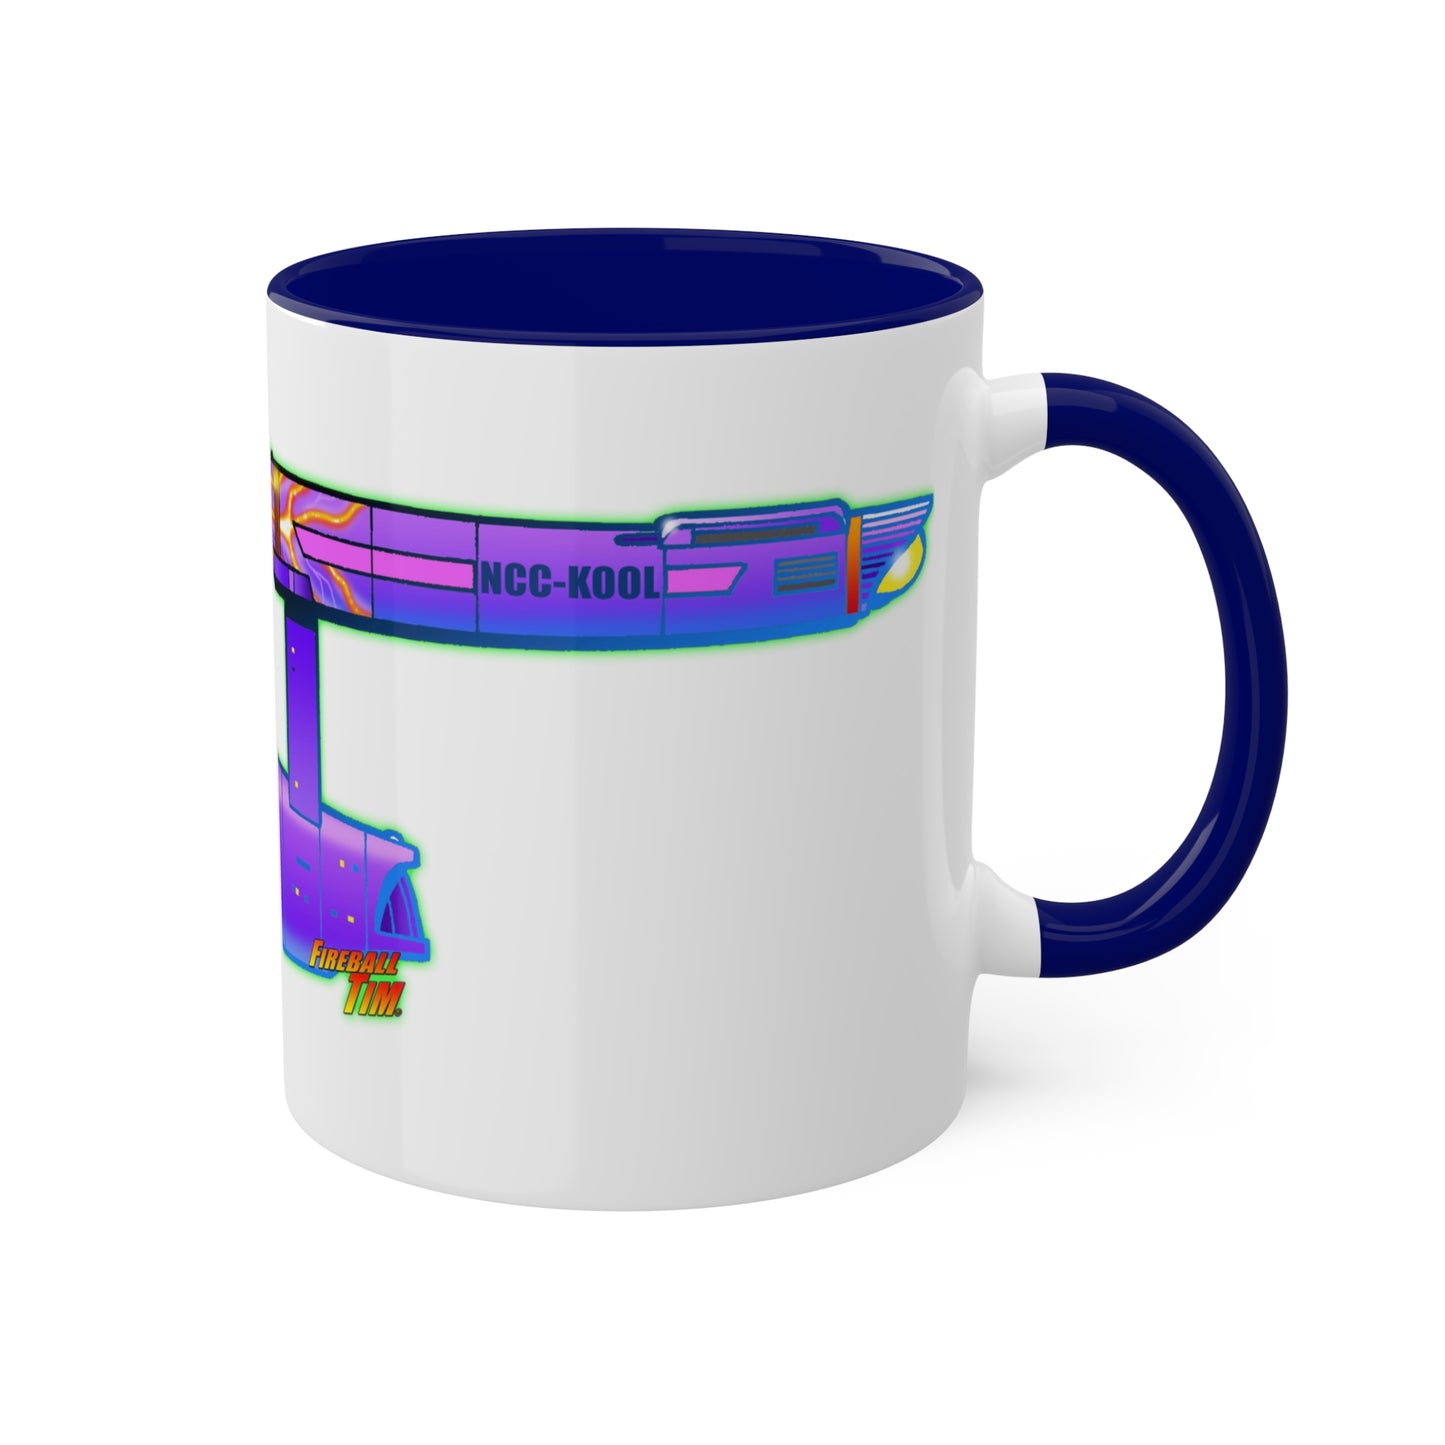 Hot Rod ENTERPRISE Starship Spaceship Coffee Mug 11oz